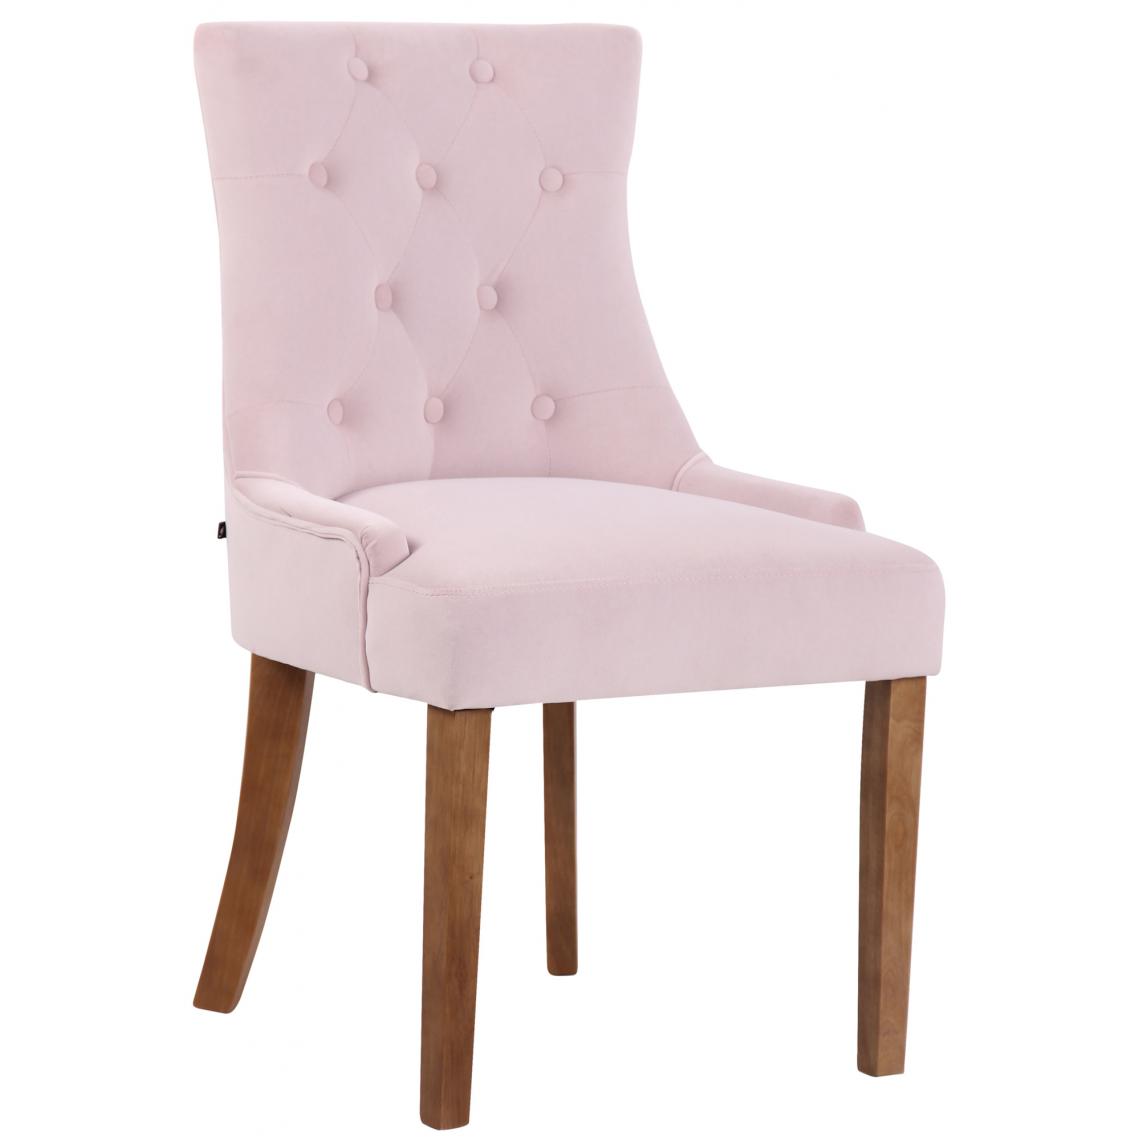 Icaverne - Admirable Chaise de salle à manger reference Avarua velours antique-light couleur rose - Chaises